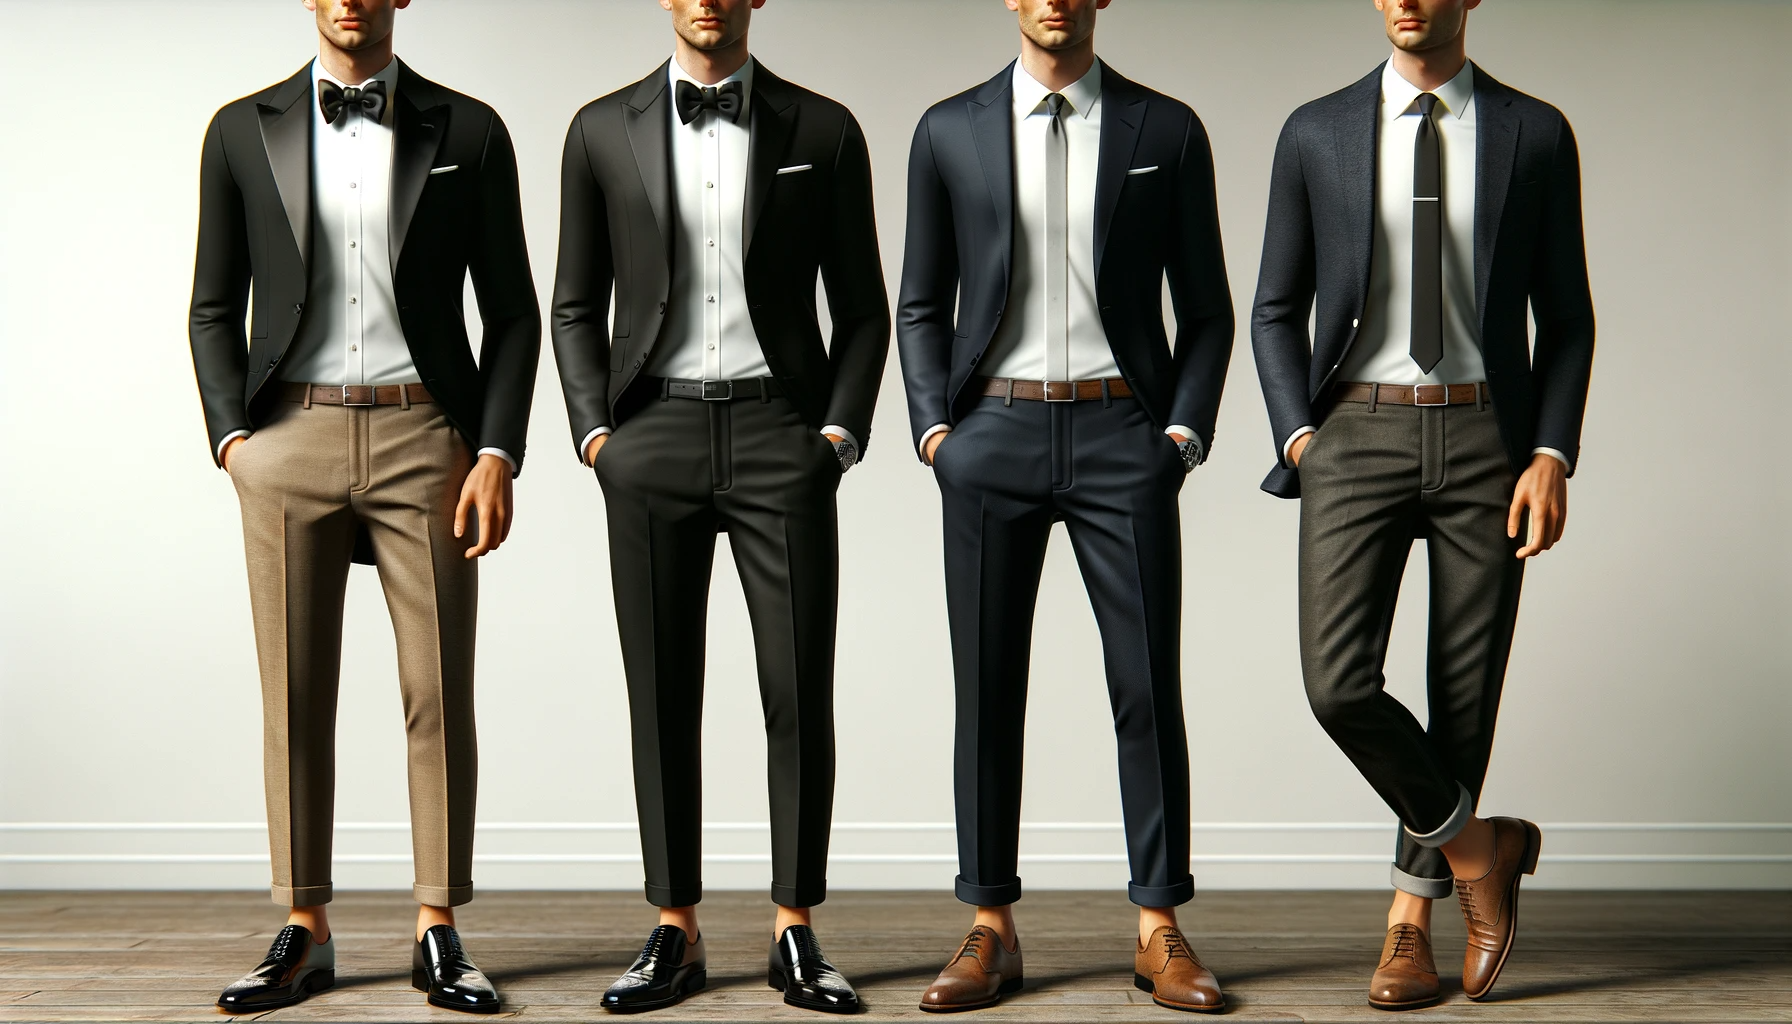 Understanding Dress Codes: Black Tie vs Formal vs Casual